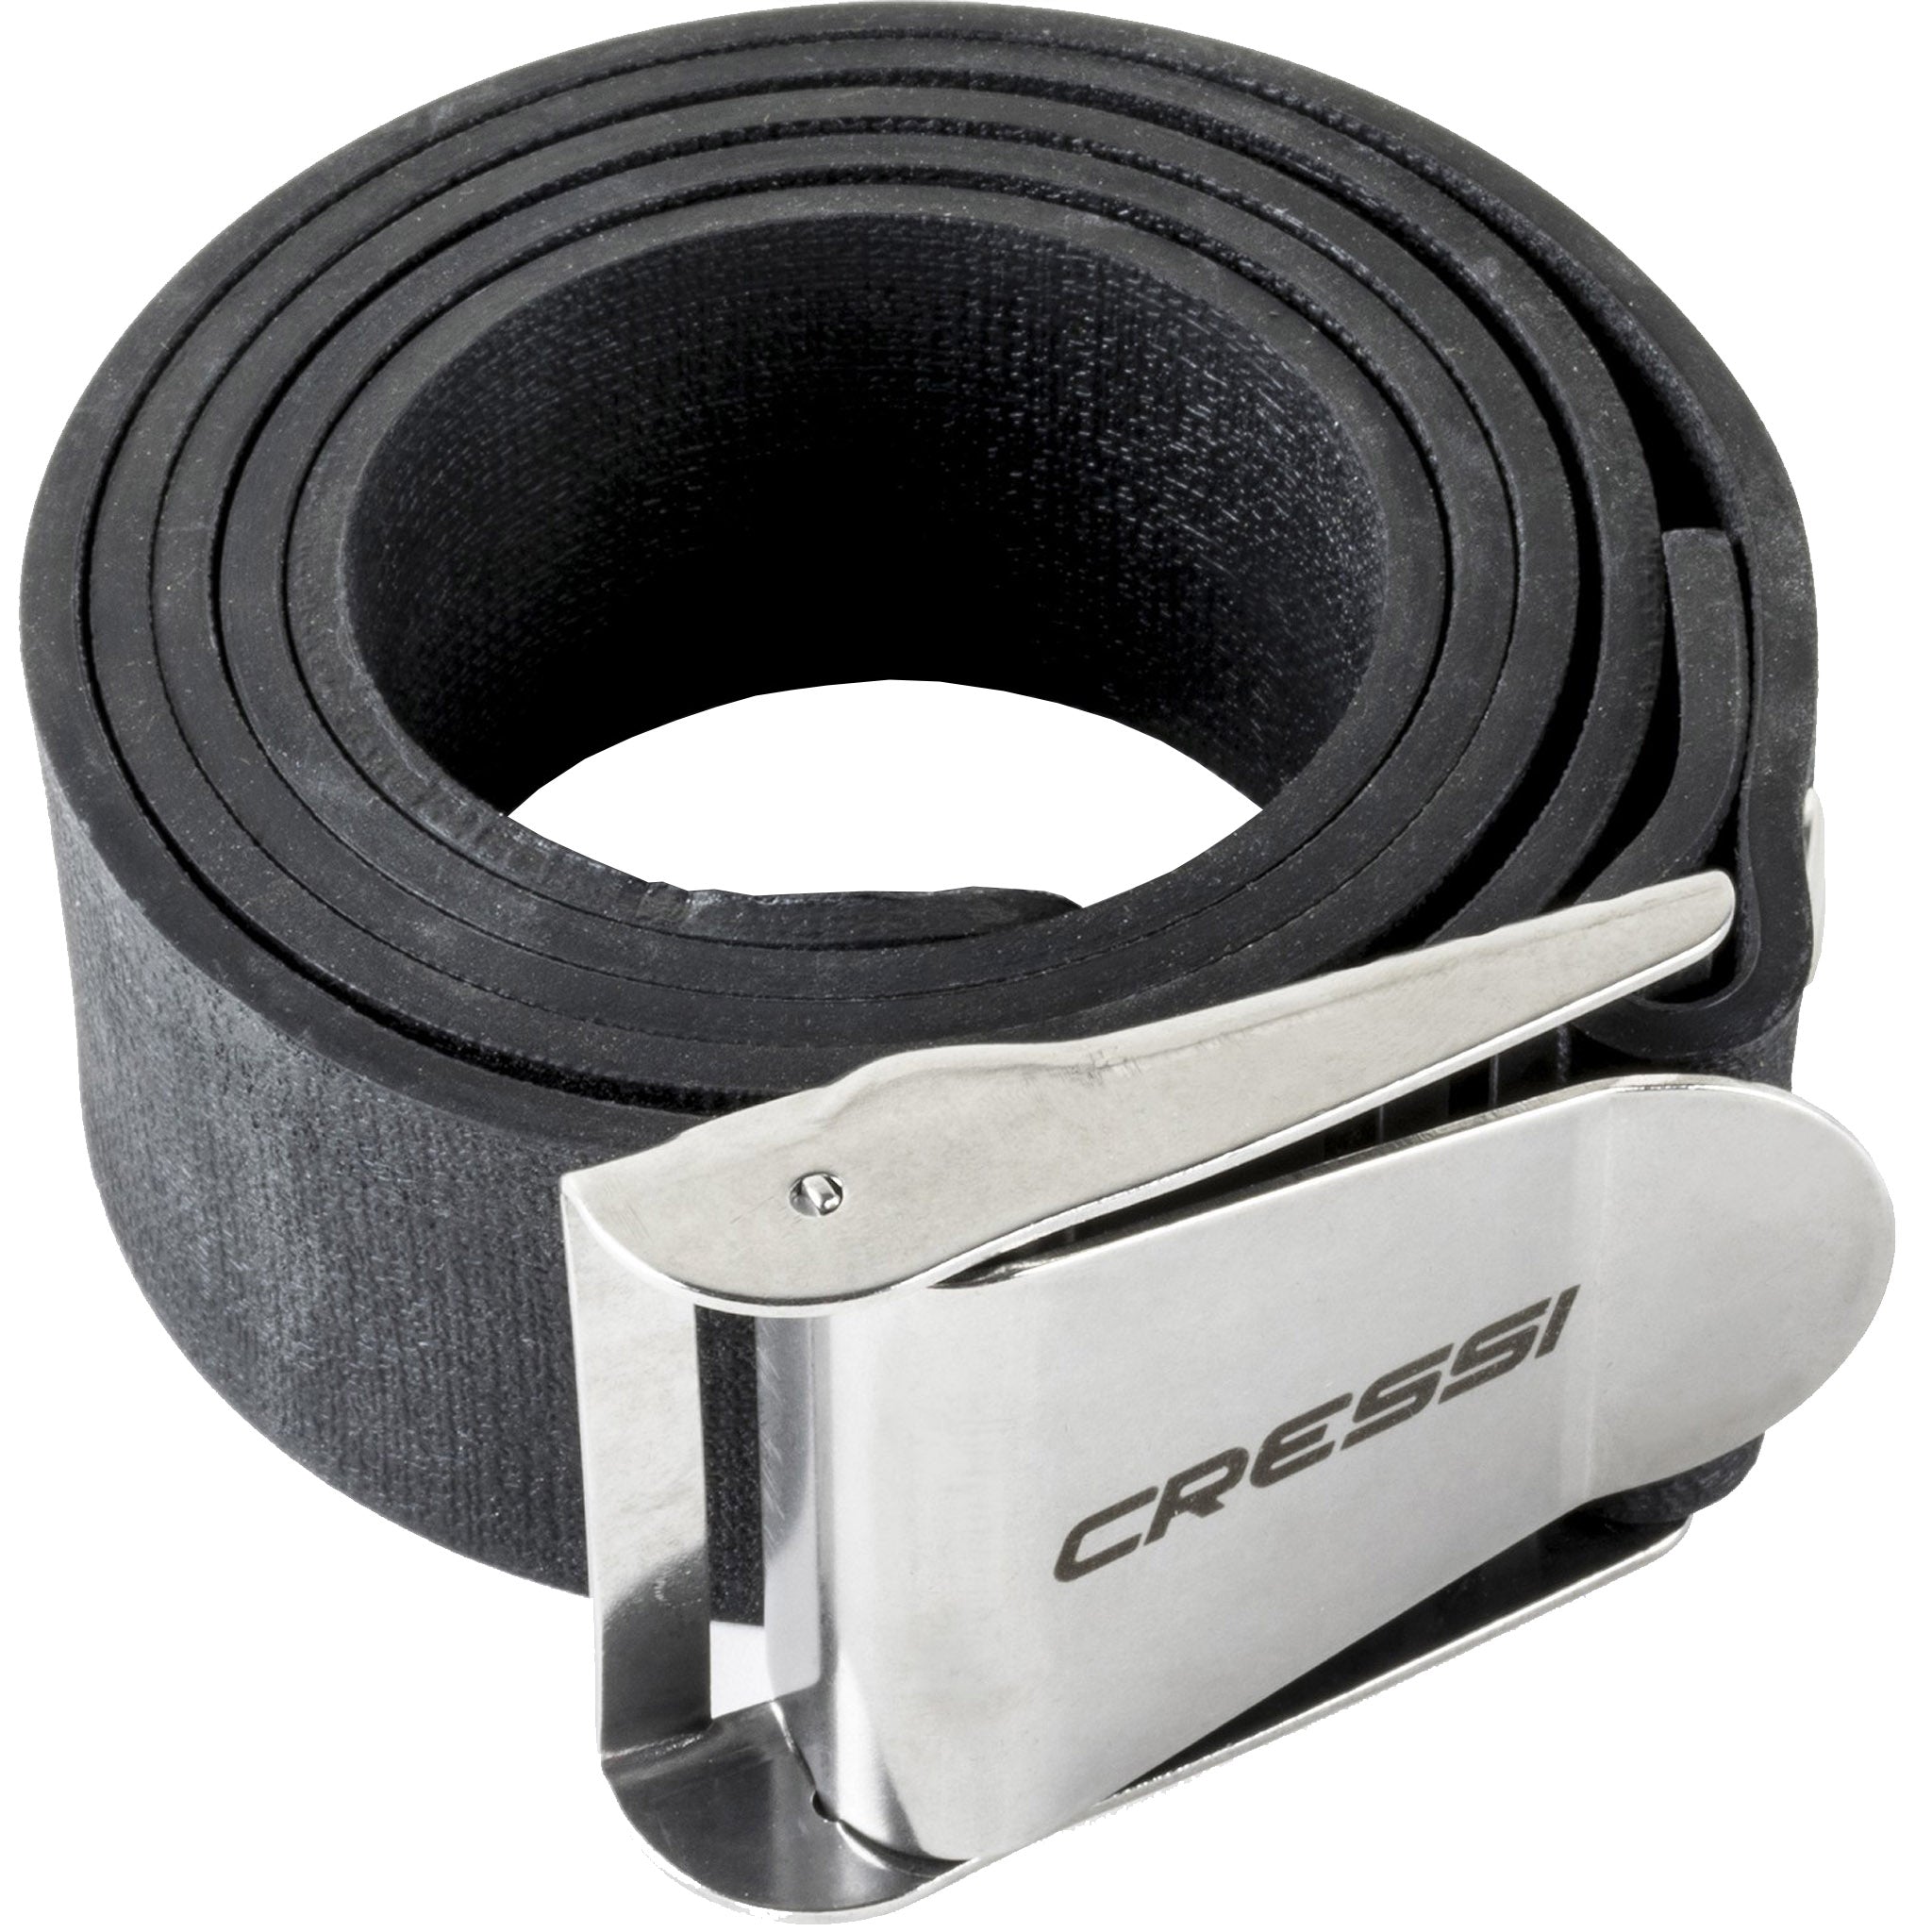 Cressi Elastic Quick Release Weight Belt